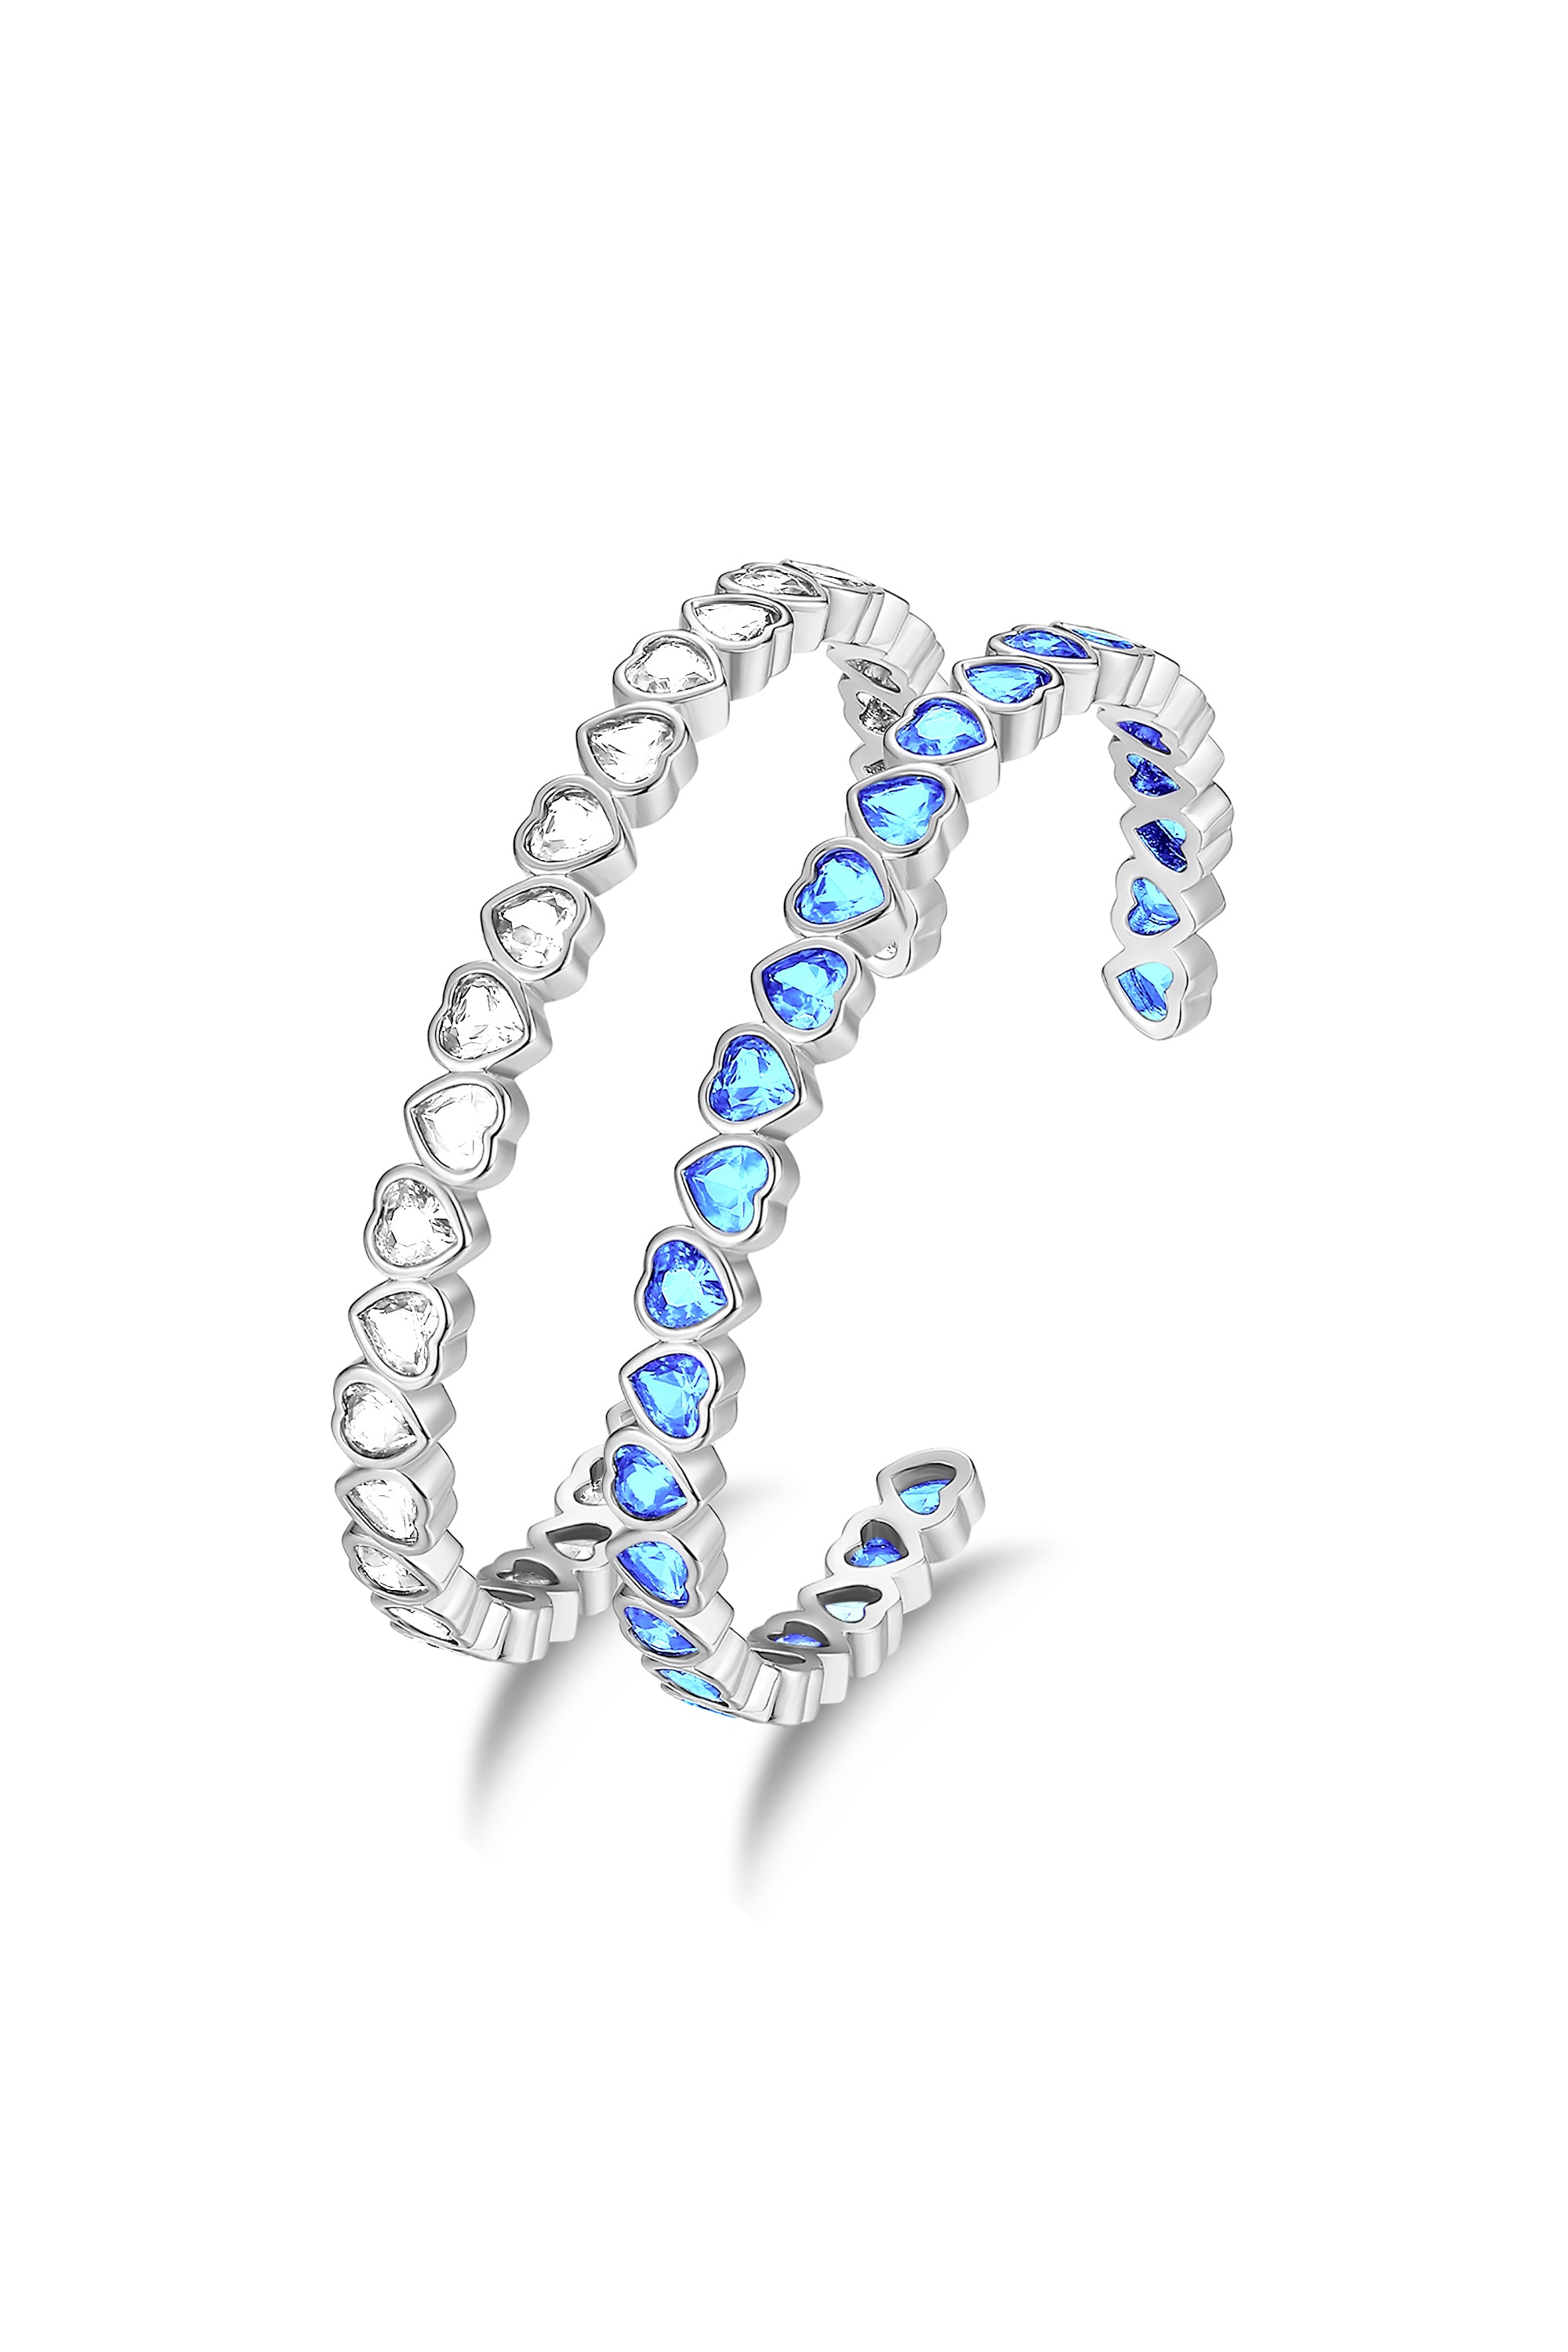 Silver Heart Shaped Zirconia Bangle Bracelet Set